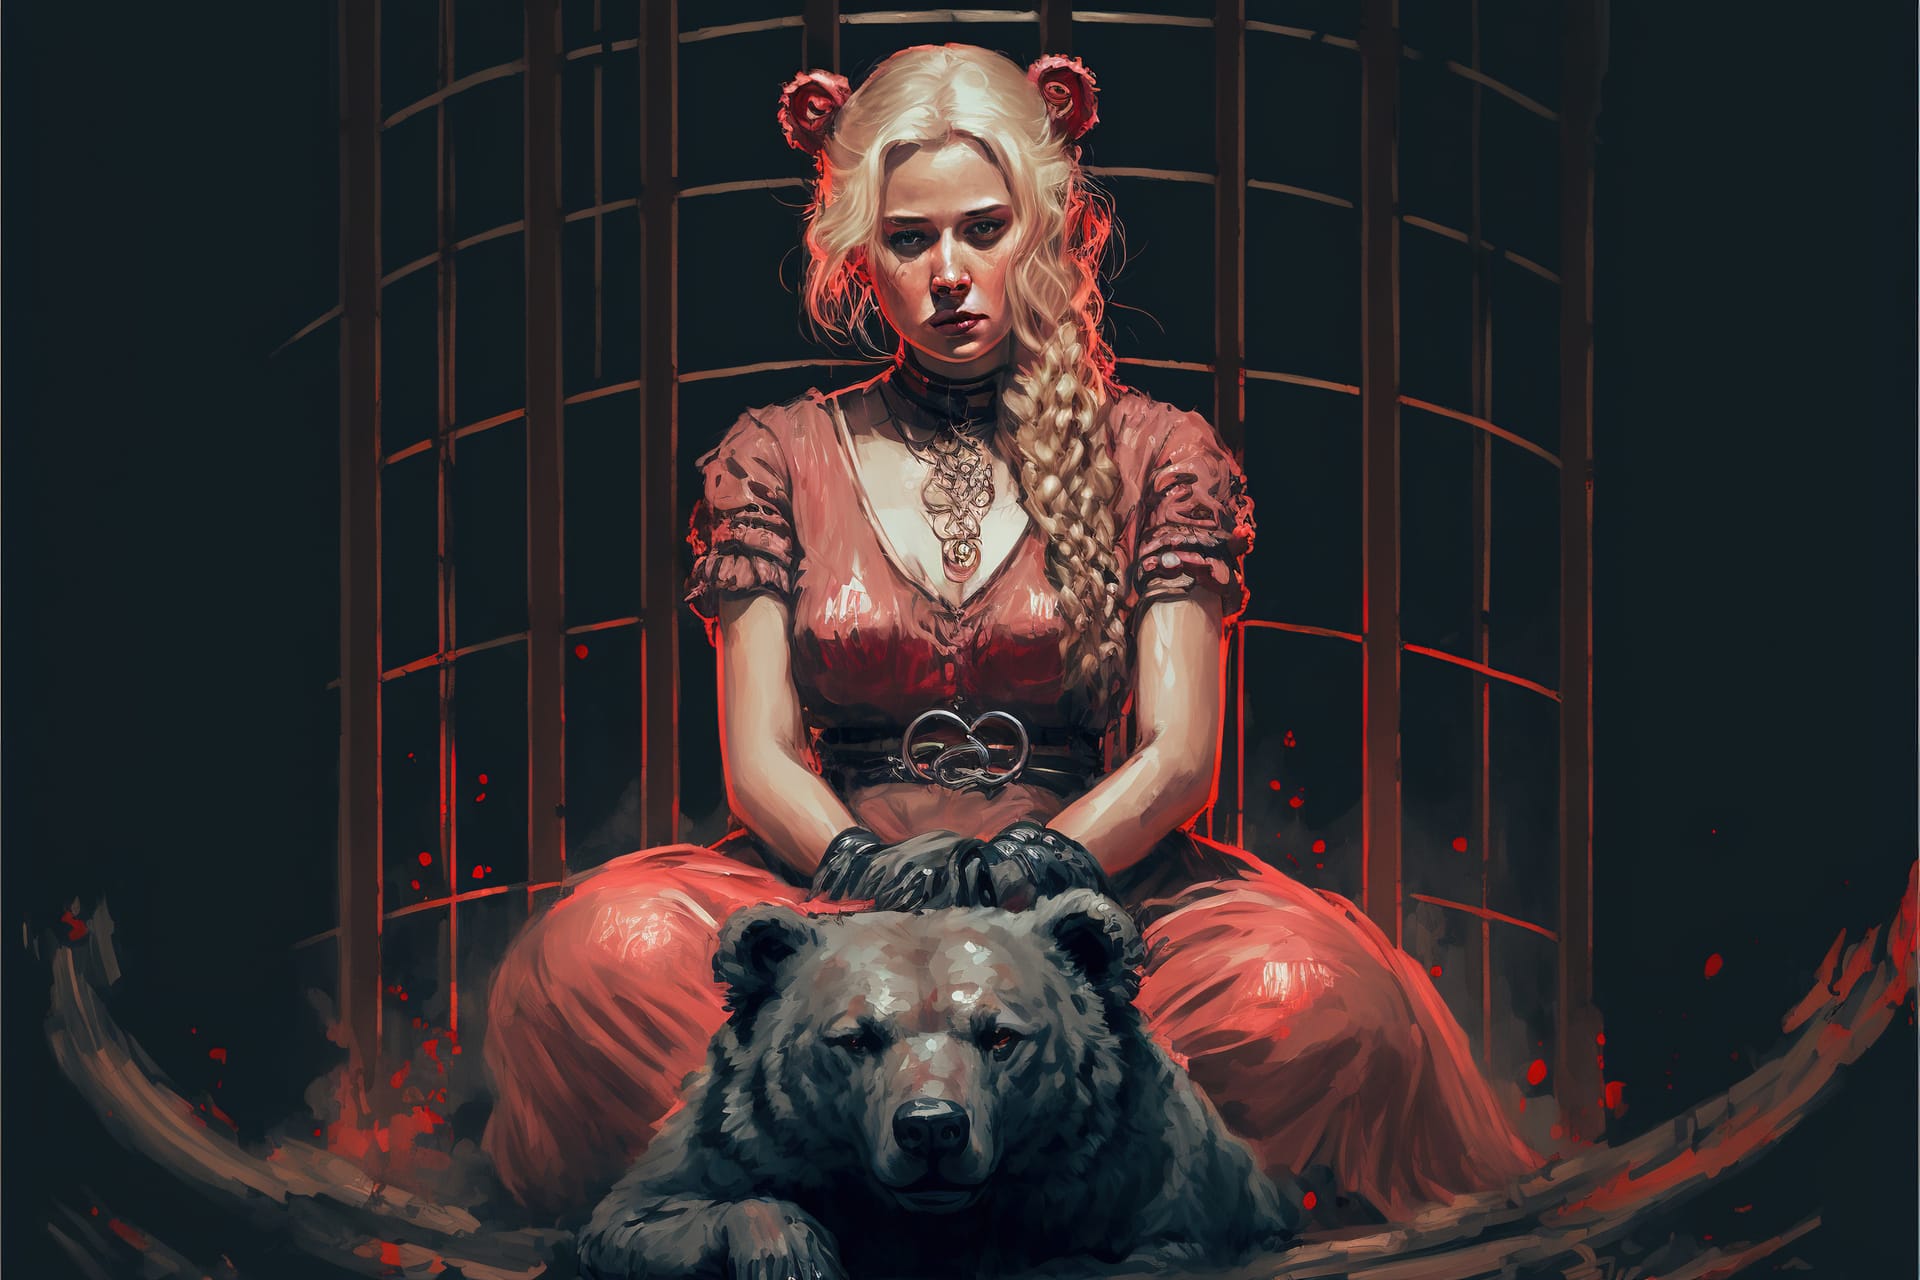 Digital art style illustration painting fantasy illustration girl sitting trap